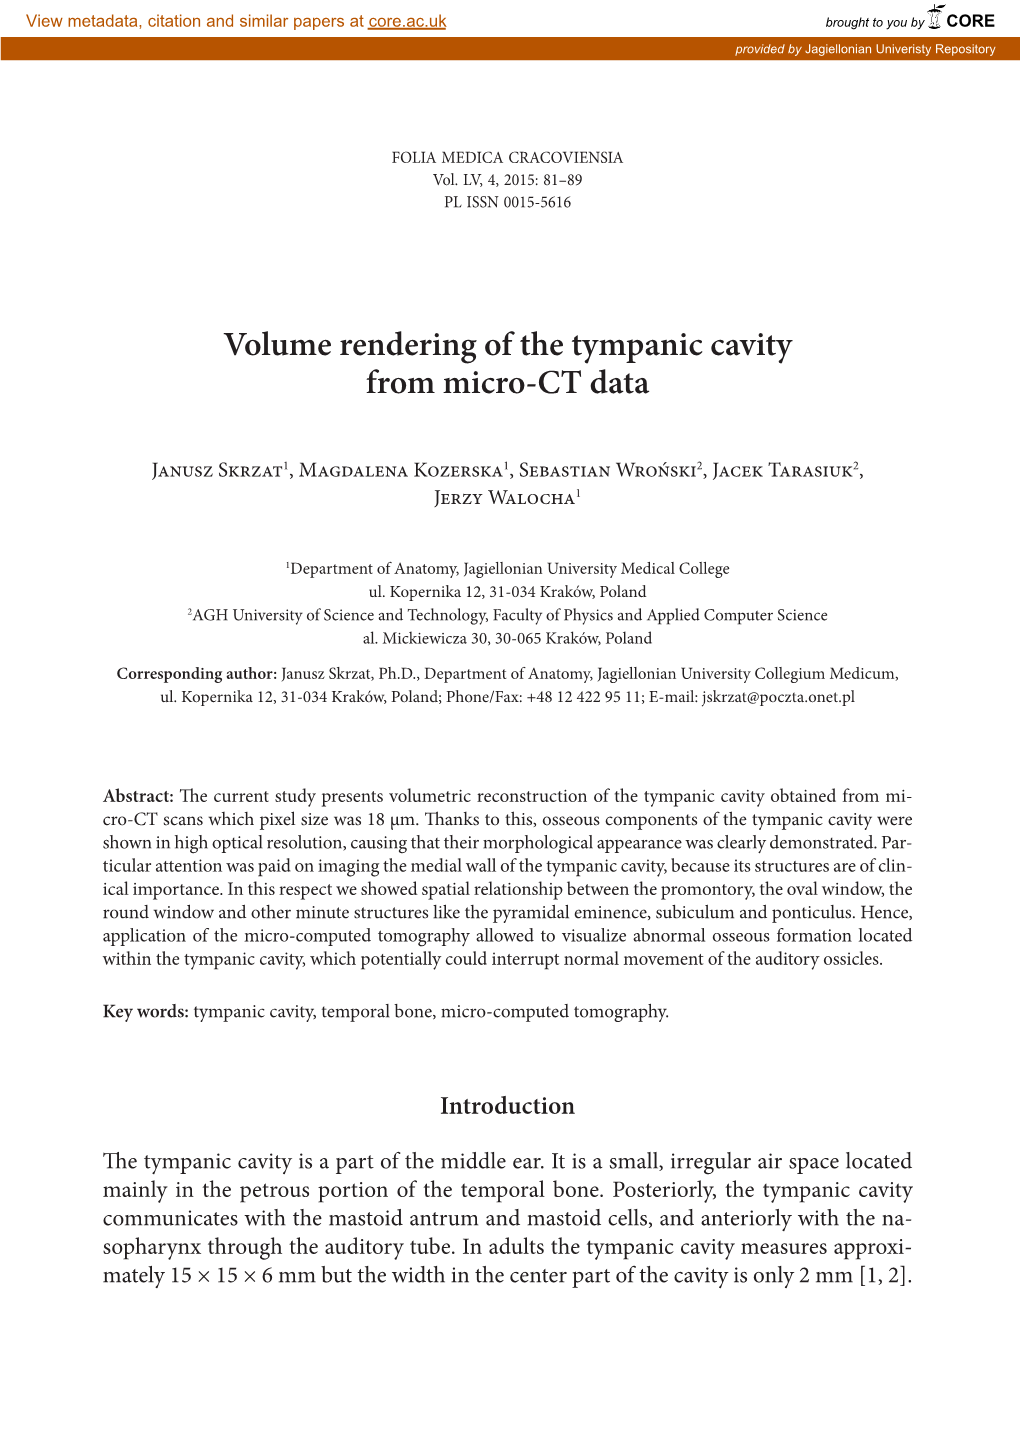 Volume Rendering of the Tympanic Cavity from Micro-Ct Data